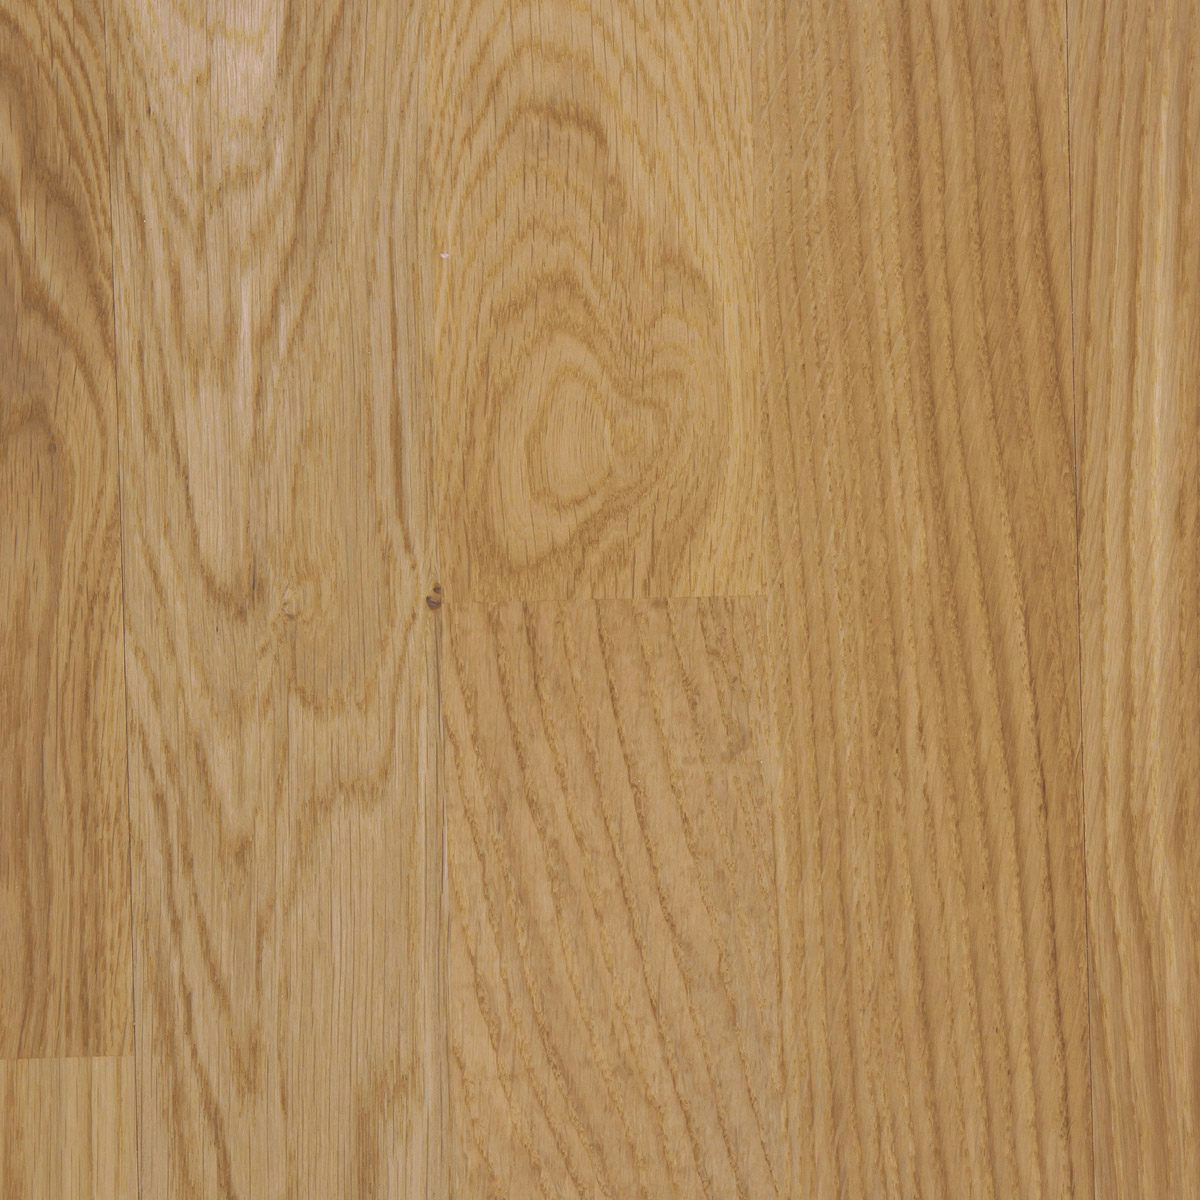 Tuscan Strato Classic Family Oak 3 Ply, Thin Strip Hardwood Flooring